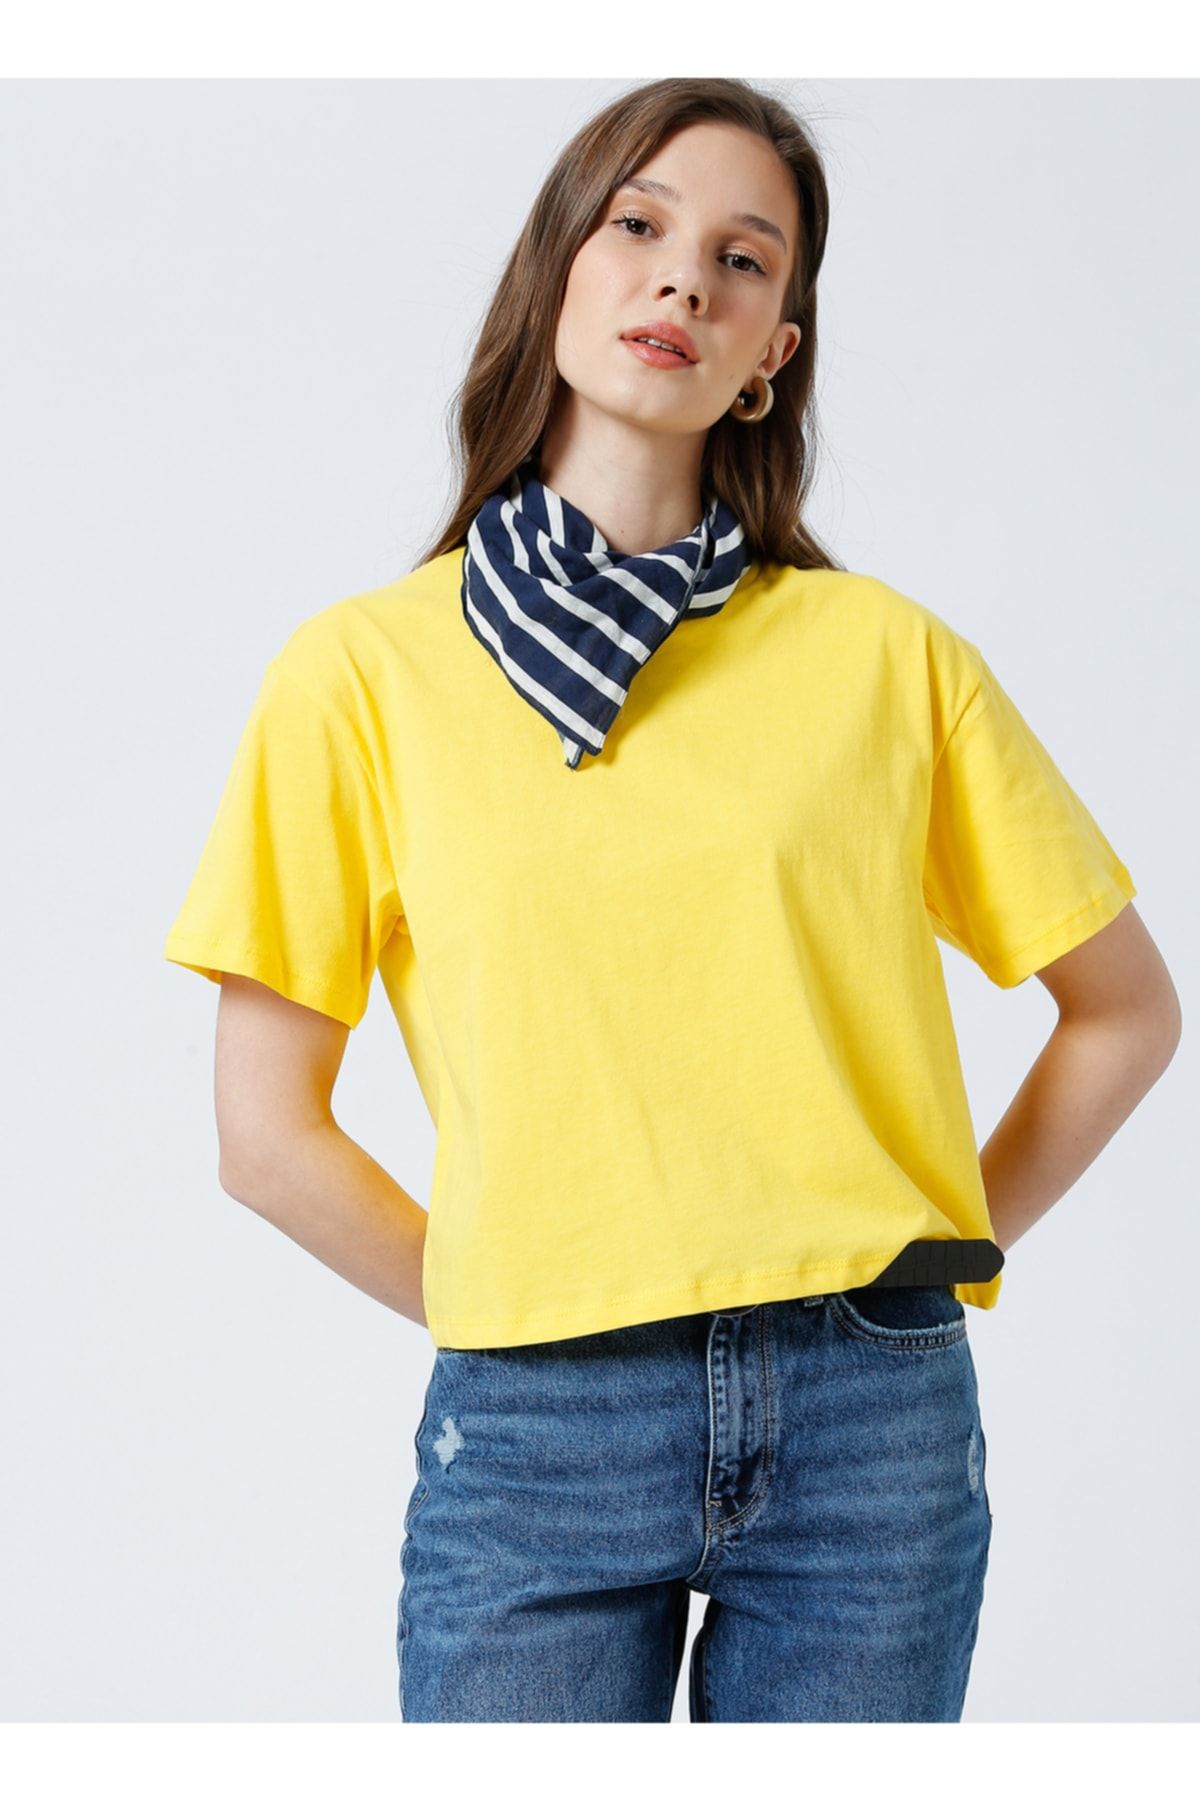 Fabrika Bisiklet Yaka Crop Düz Sarı Kadın T-shirt - K-abella